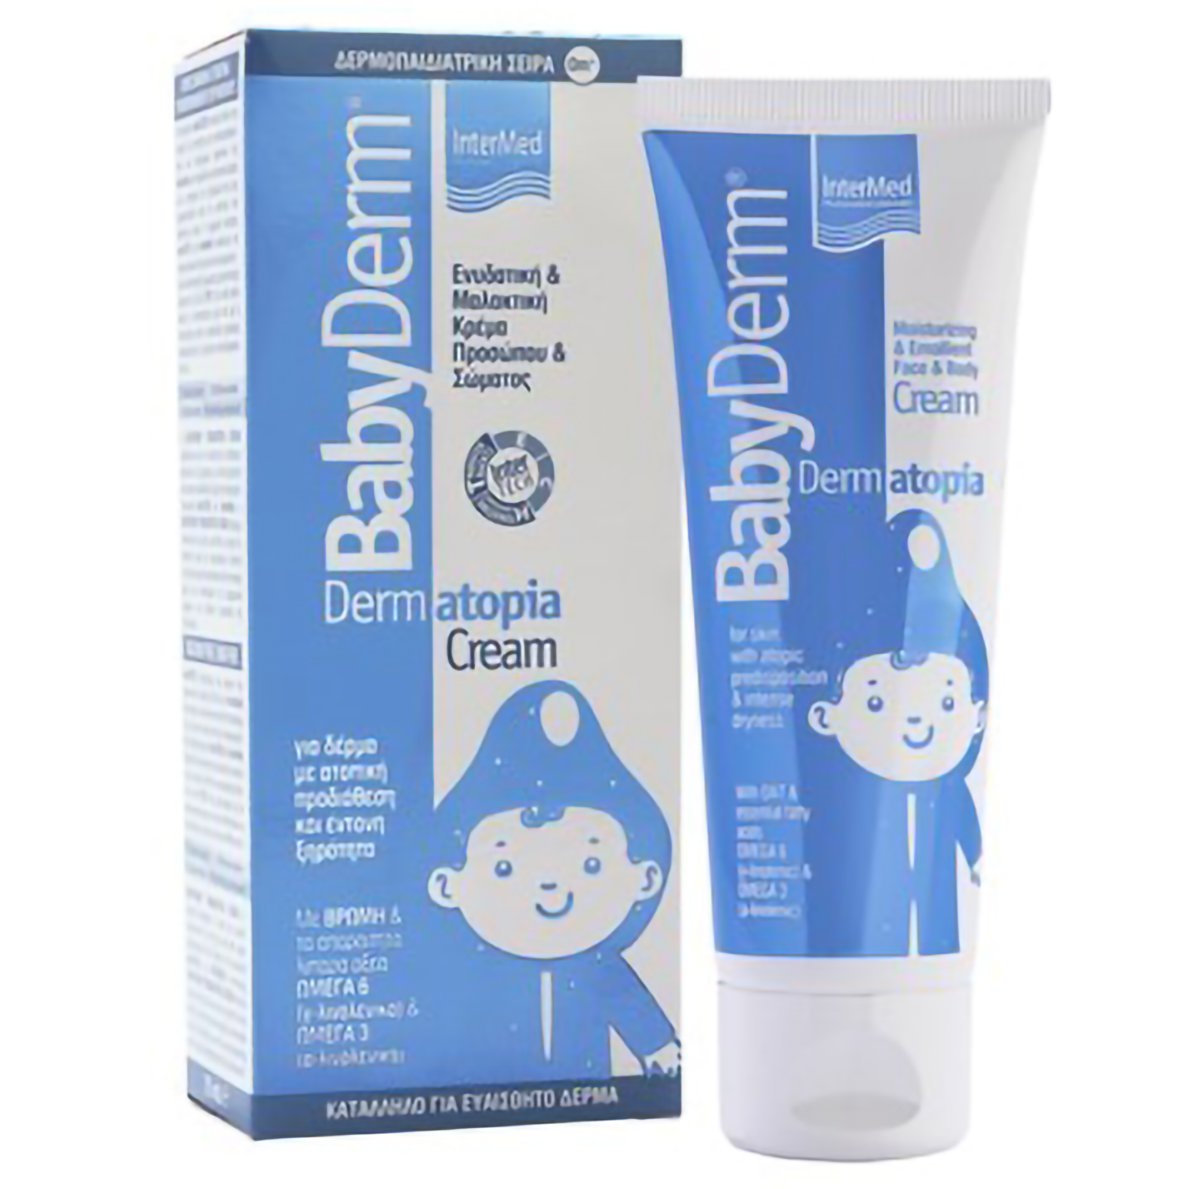 Babyderm Dermatopia Moisturizing & Emollient Cream Face, Body Ενυδατική & Μαλακτική Κρέμα Προσώπου, Σώματος 75ml